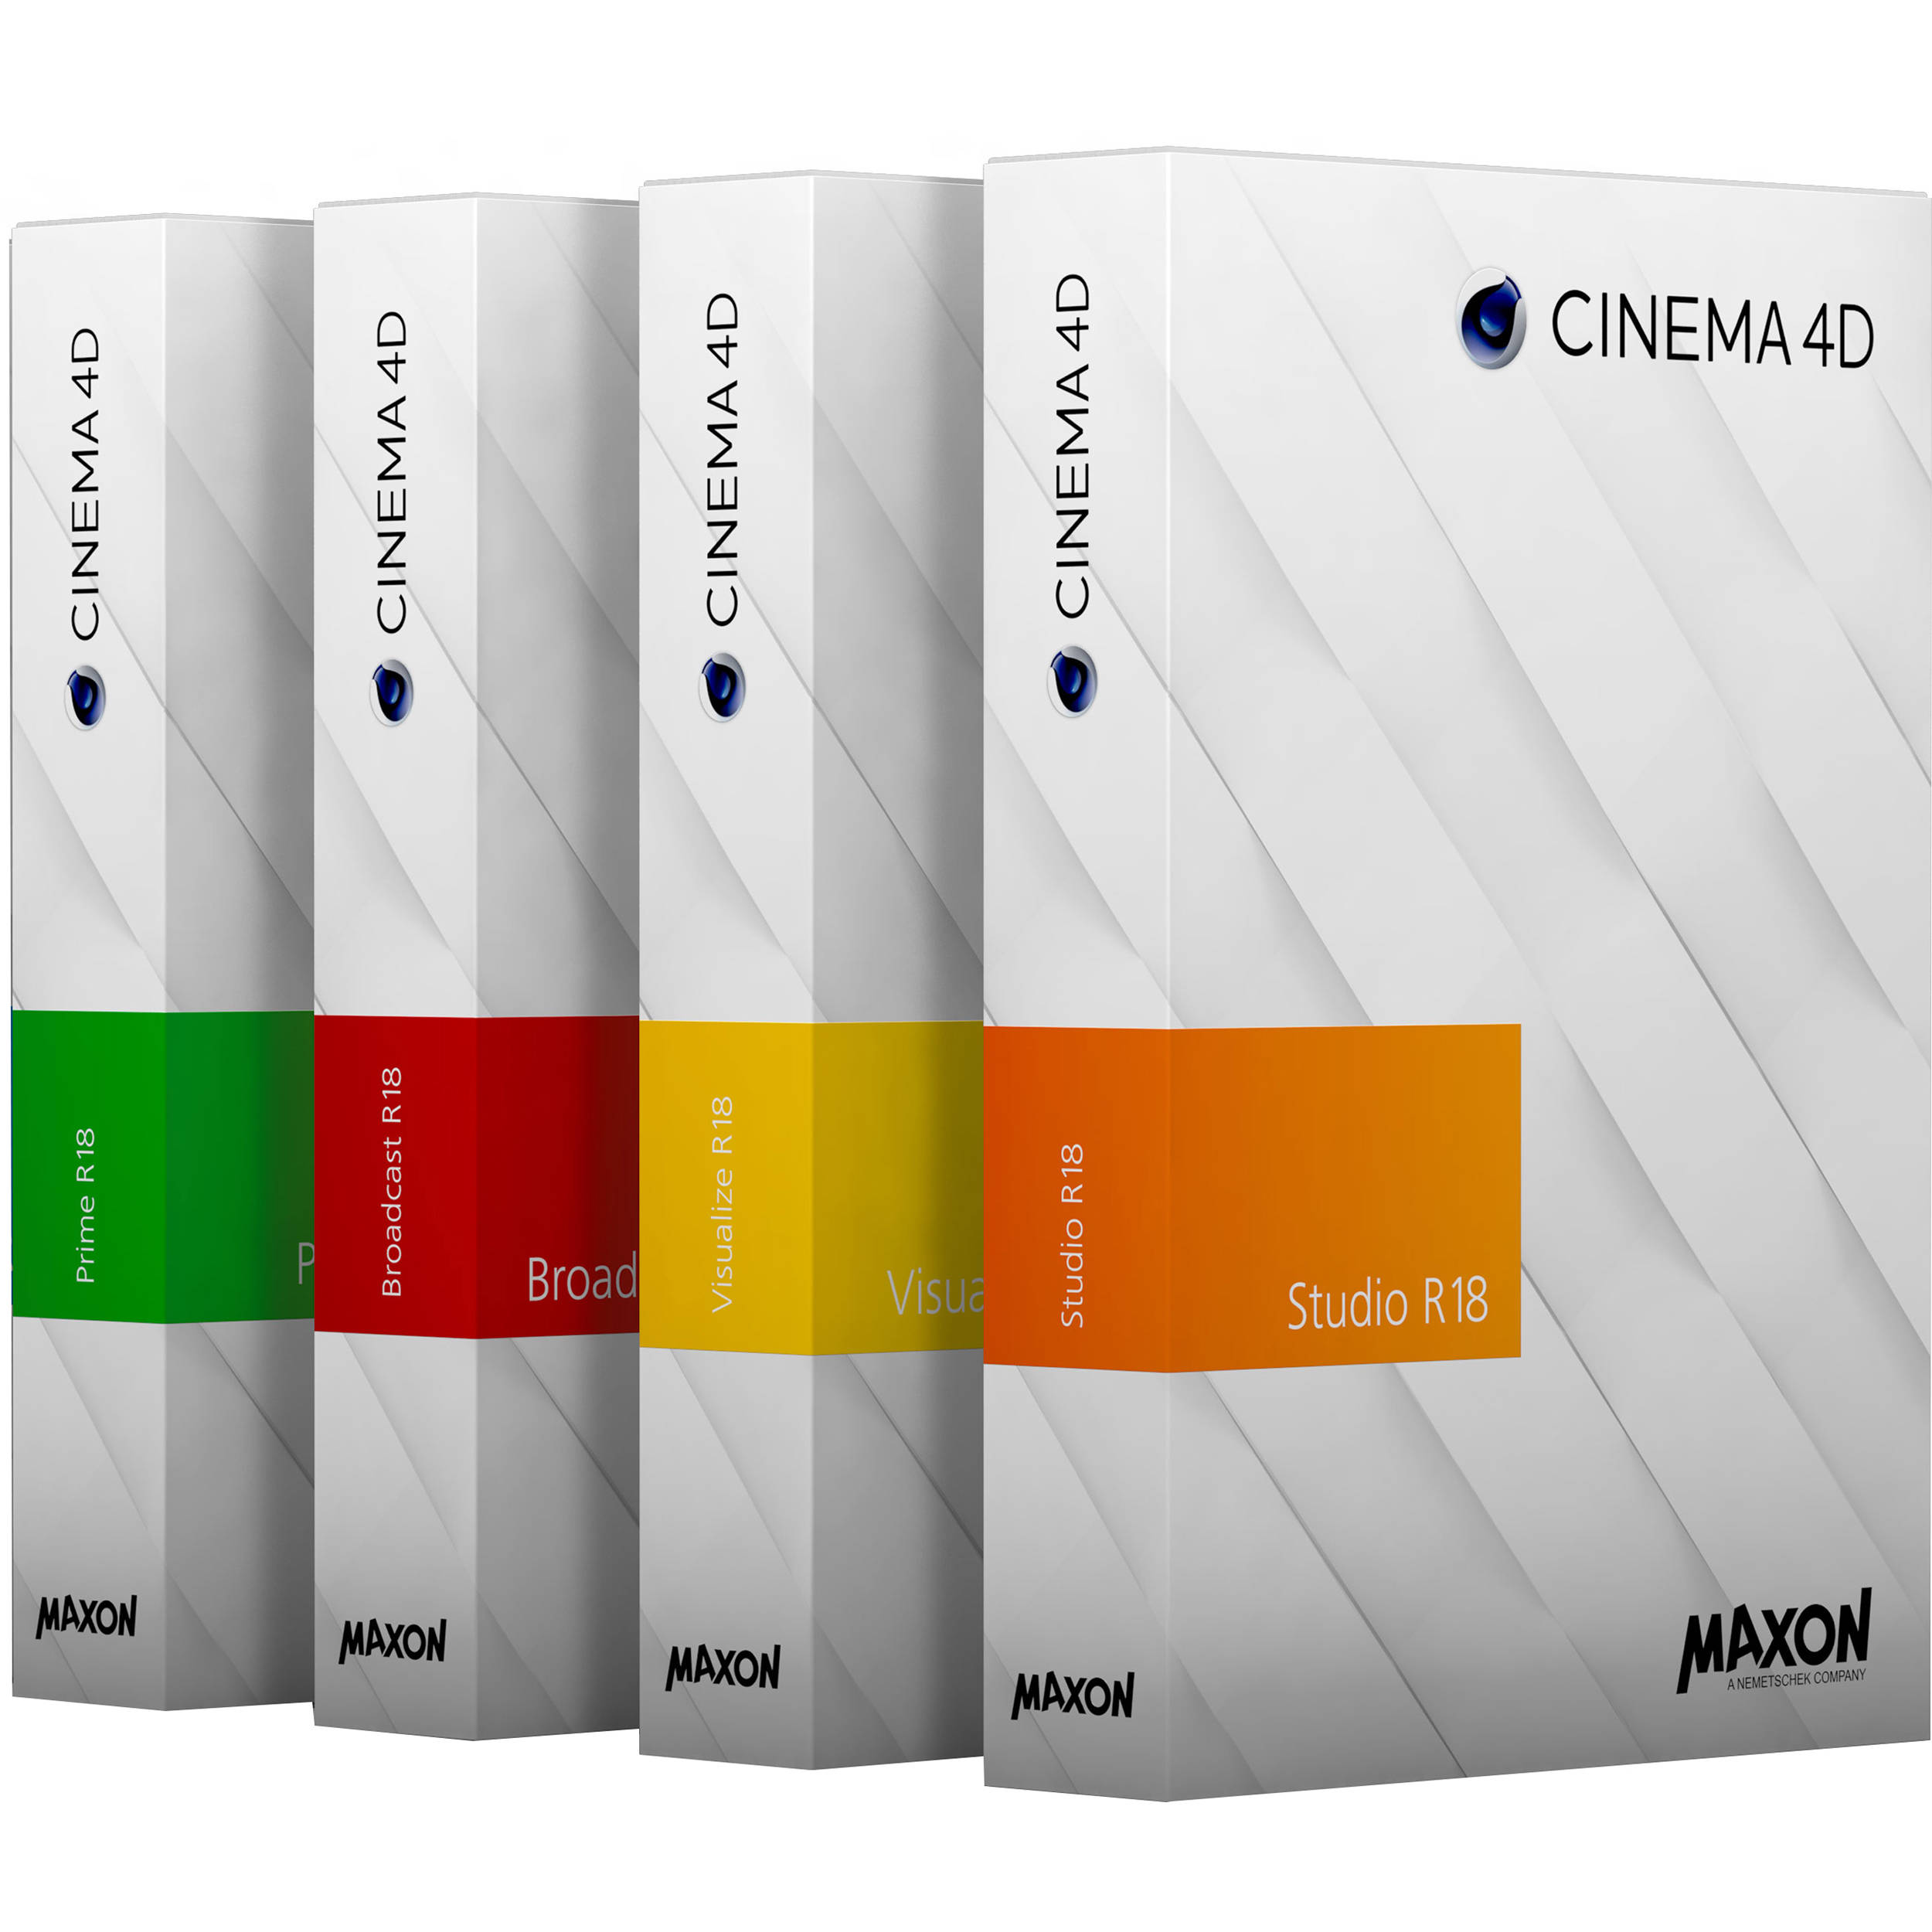 Maxon Cinema 4D Studio R18 license